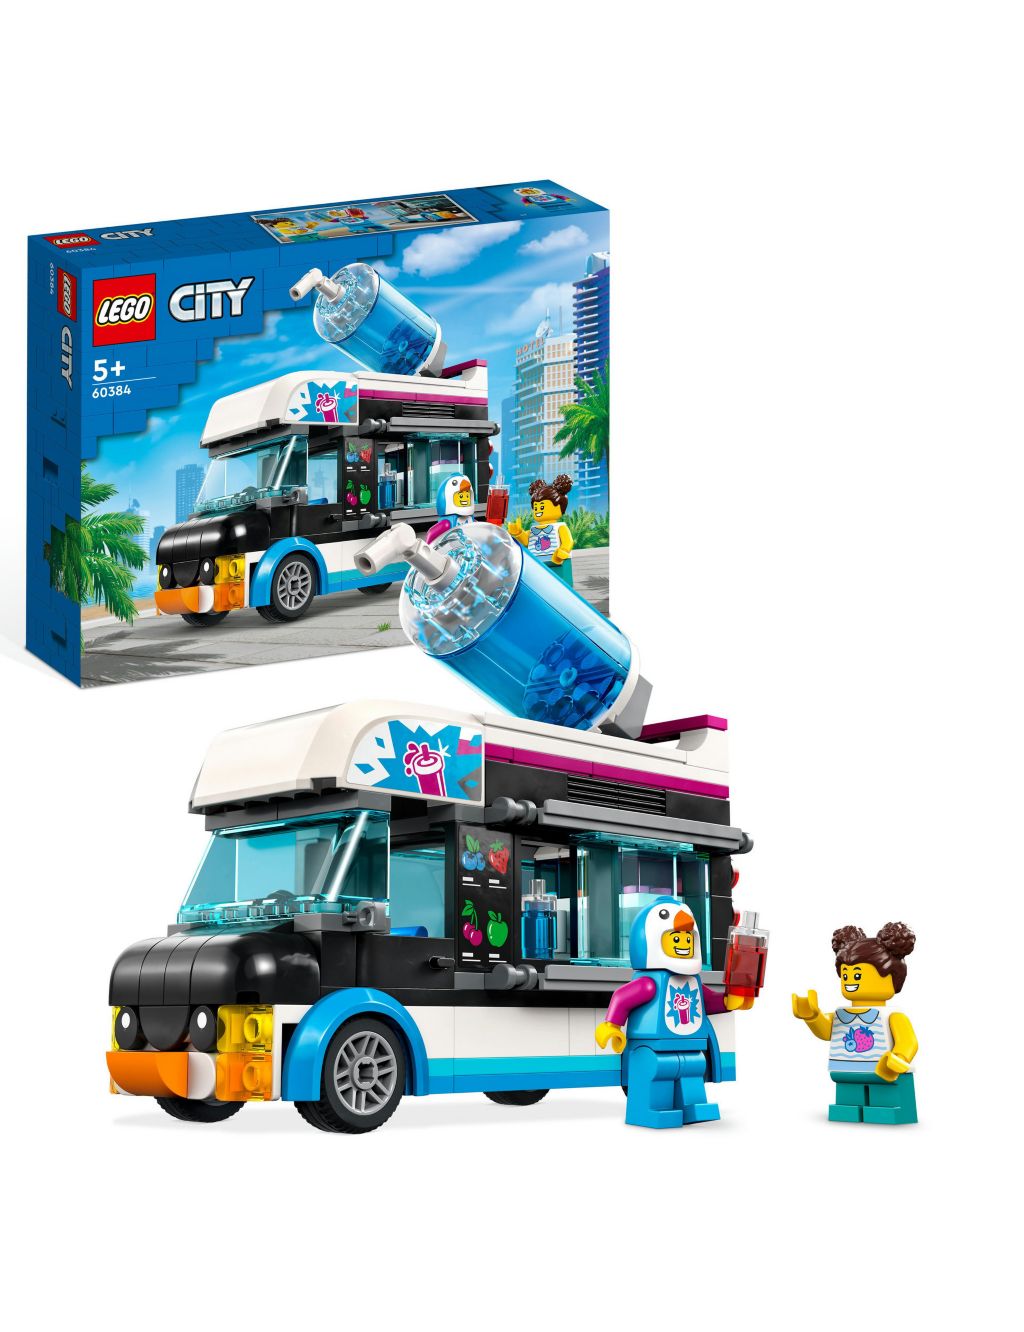 LEGO City Penguin Slushy Van, Truck Toy 60384 (5+ Yrs)